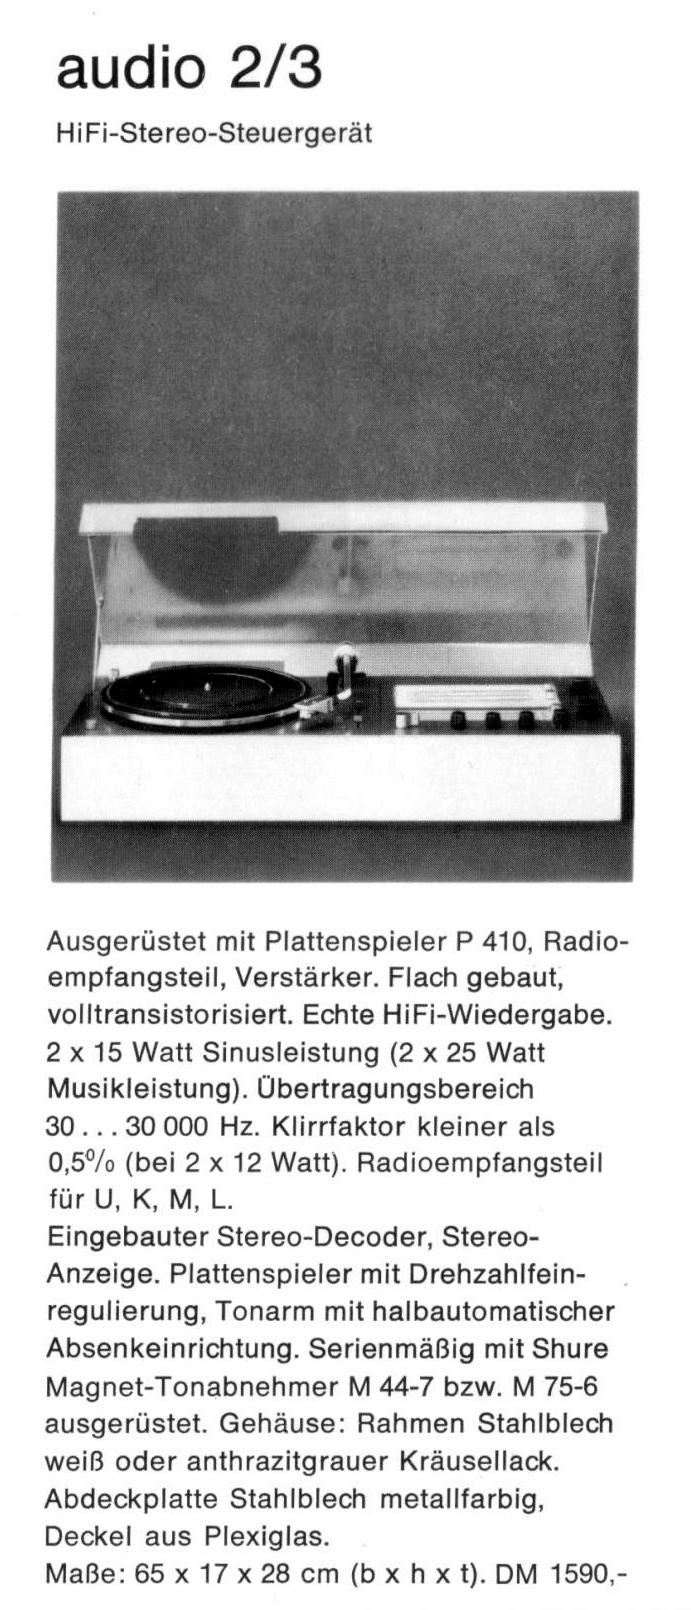 Braun Audio 2-3-Prospekt-1.jpg